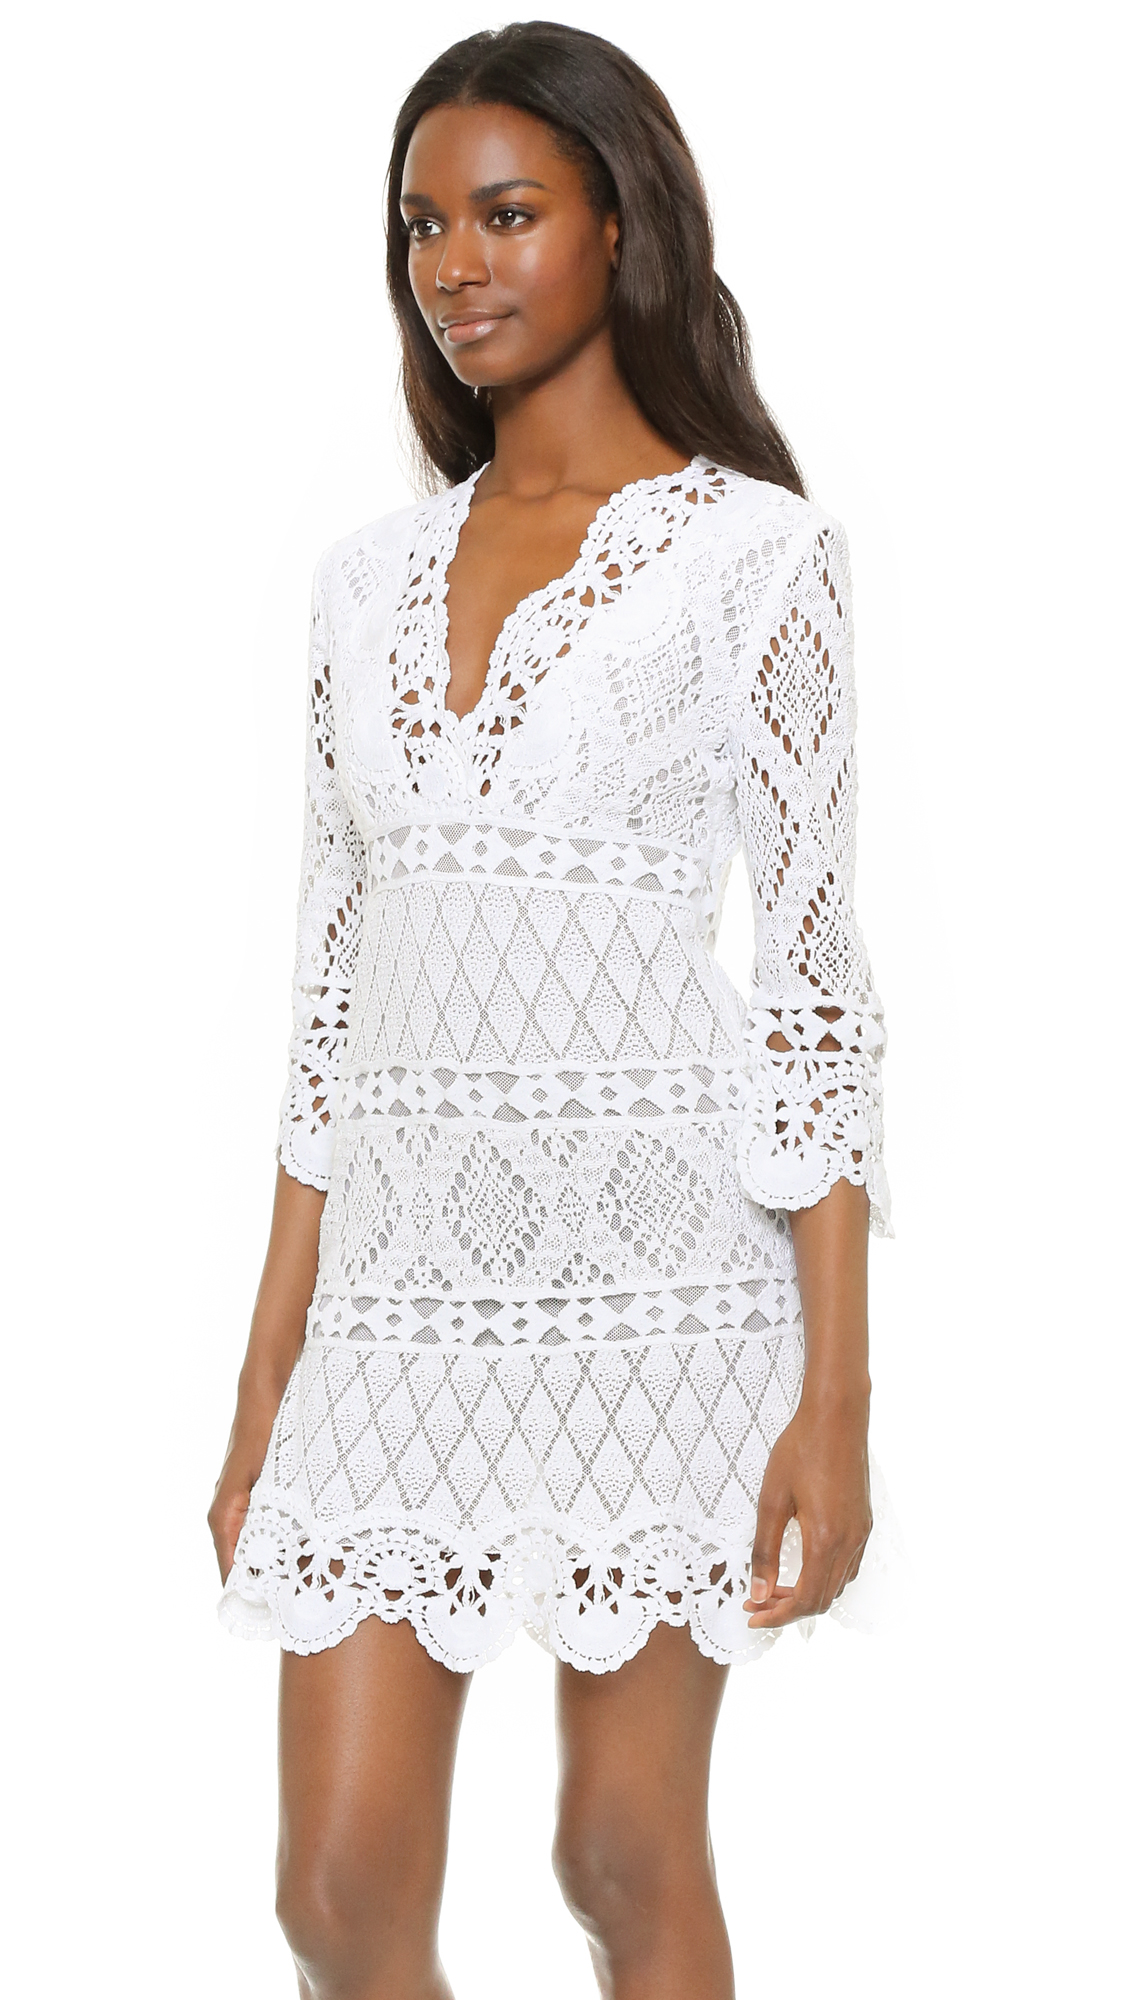 Temptation positano Crochet Dress in White | Lyst